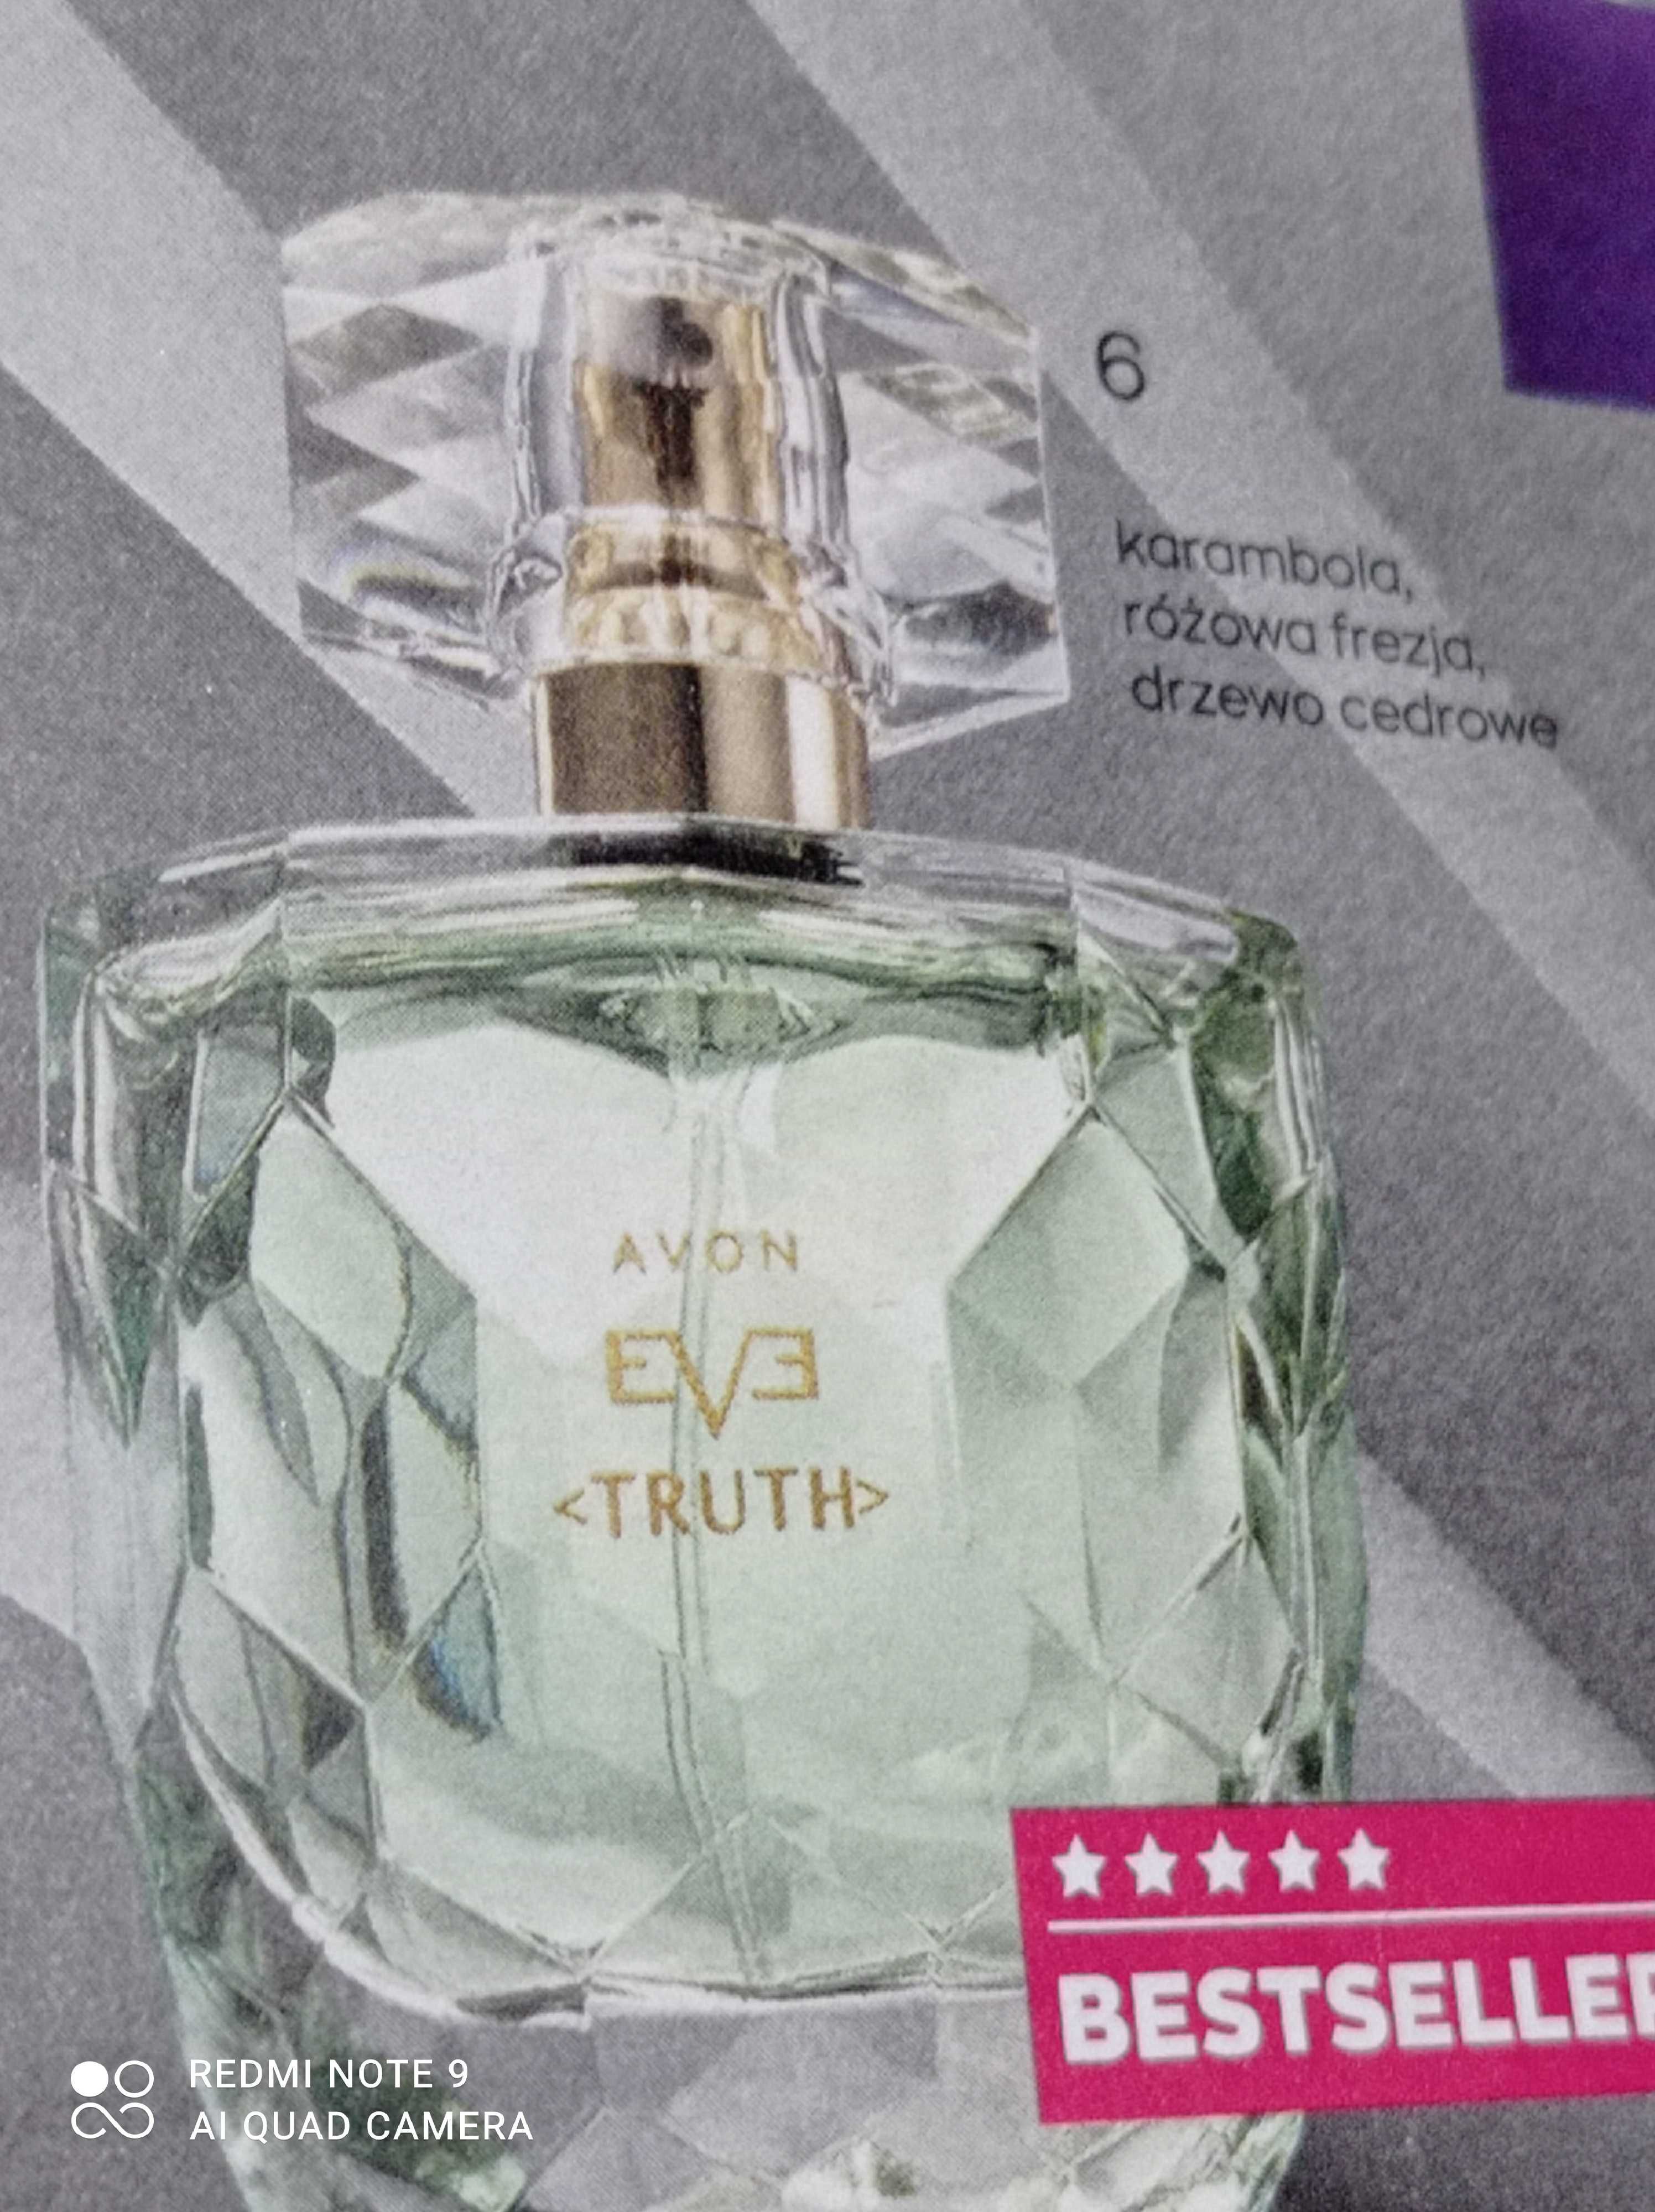 Woda perfumowana Eve Truth Avon.